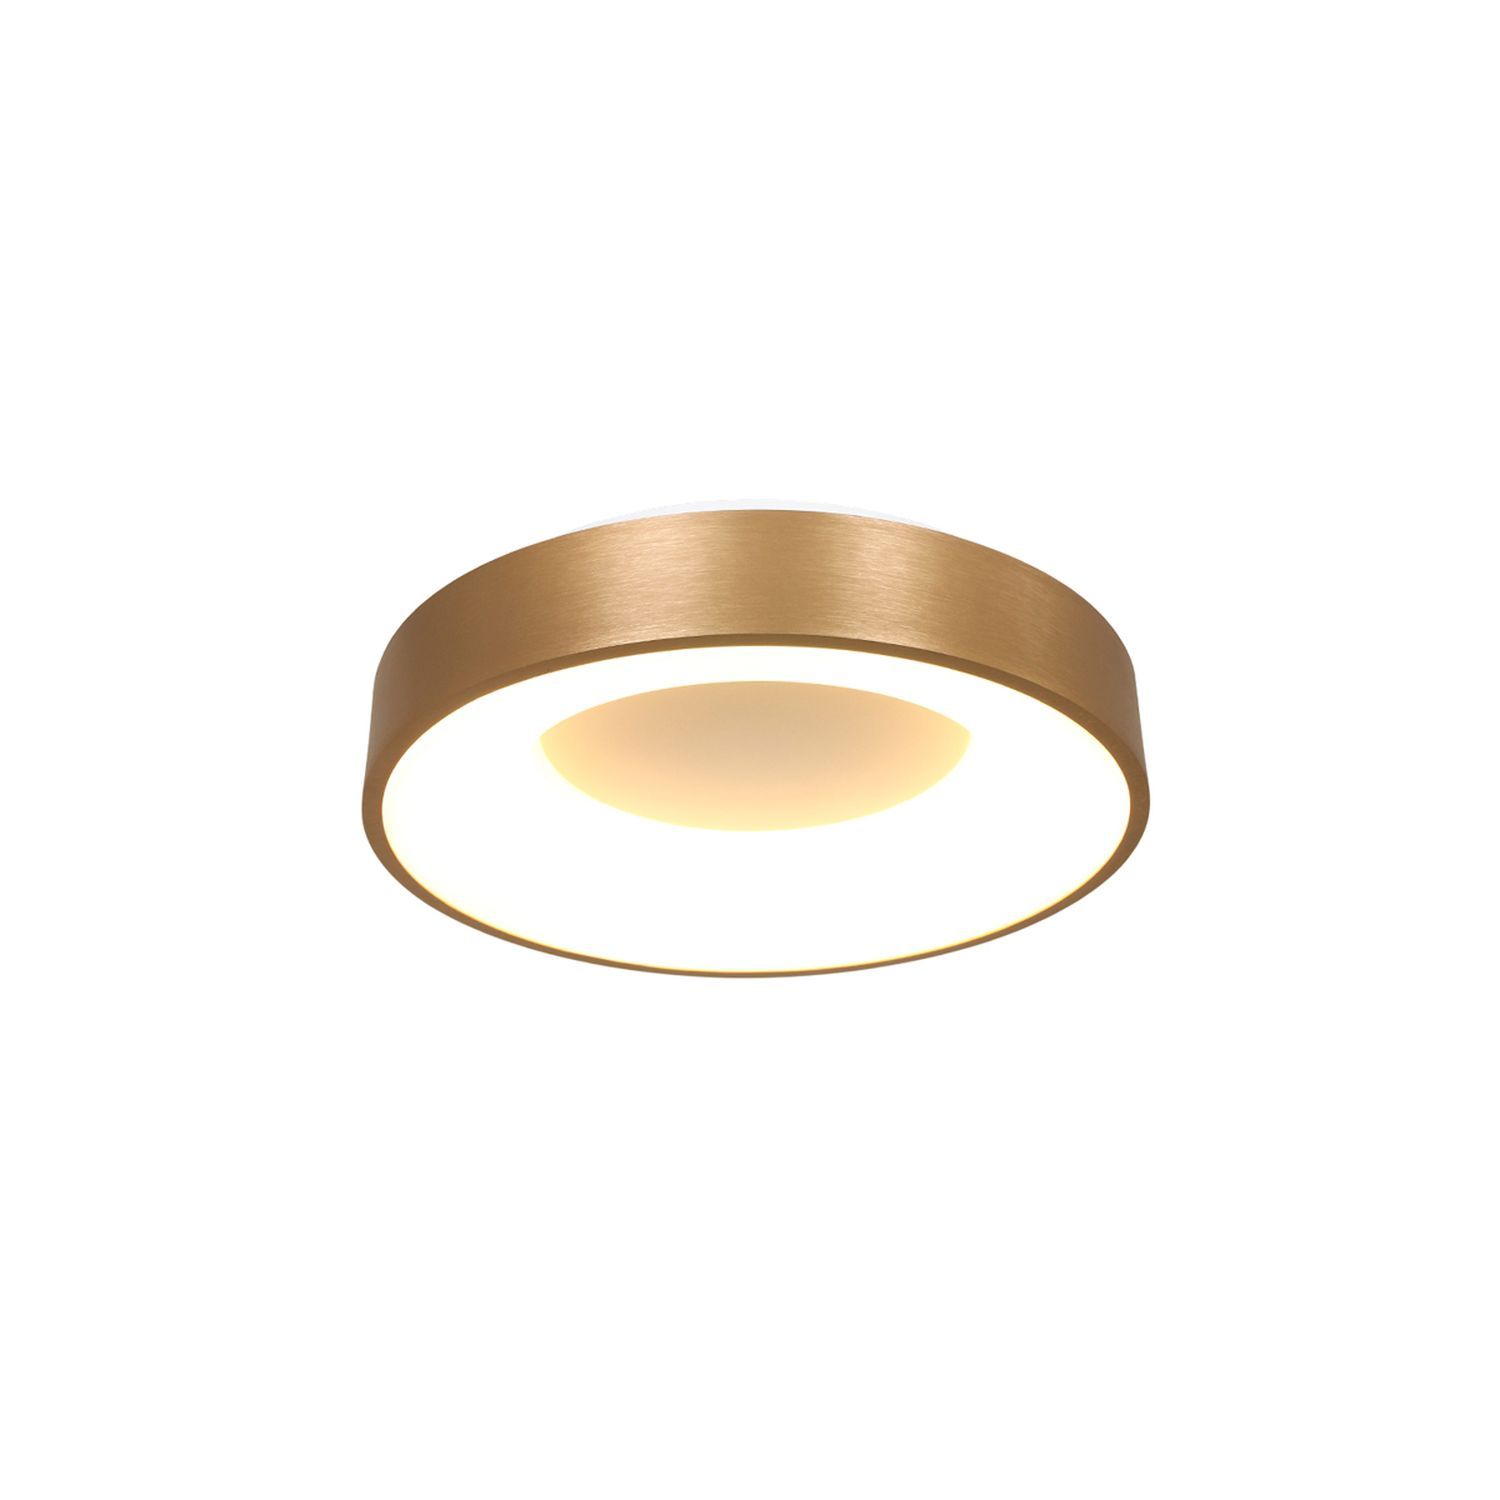 Blendarme LED Deckenlampe in Gold Weiß Ø30 cm stilvoll